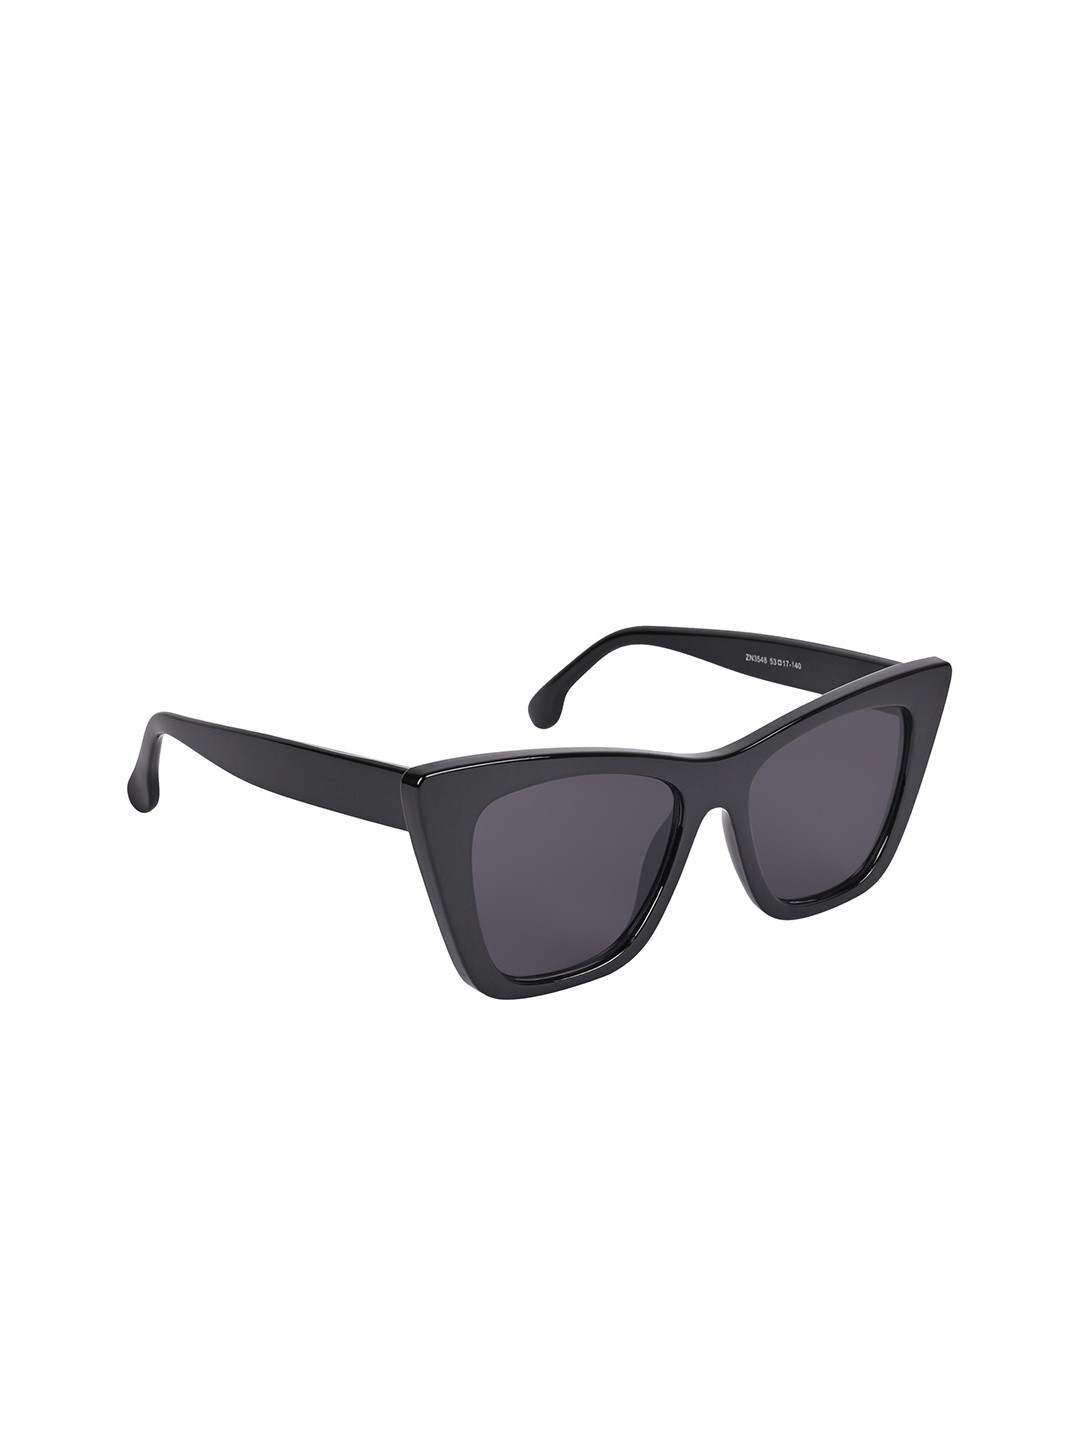 

NuVew Unisex Wayfarer Sunglasses with UV Protected Lens ES_16468-32-NW-3548-BLK-BLK-CEWF, Black